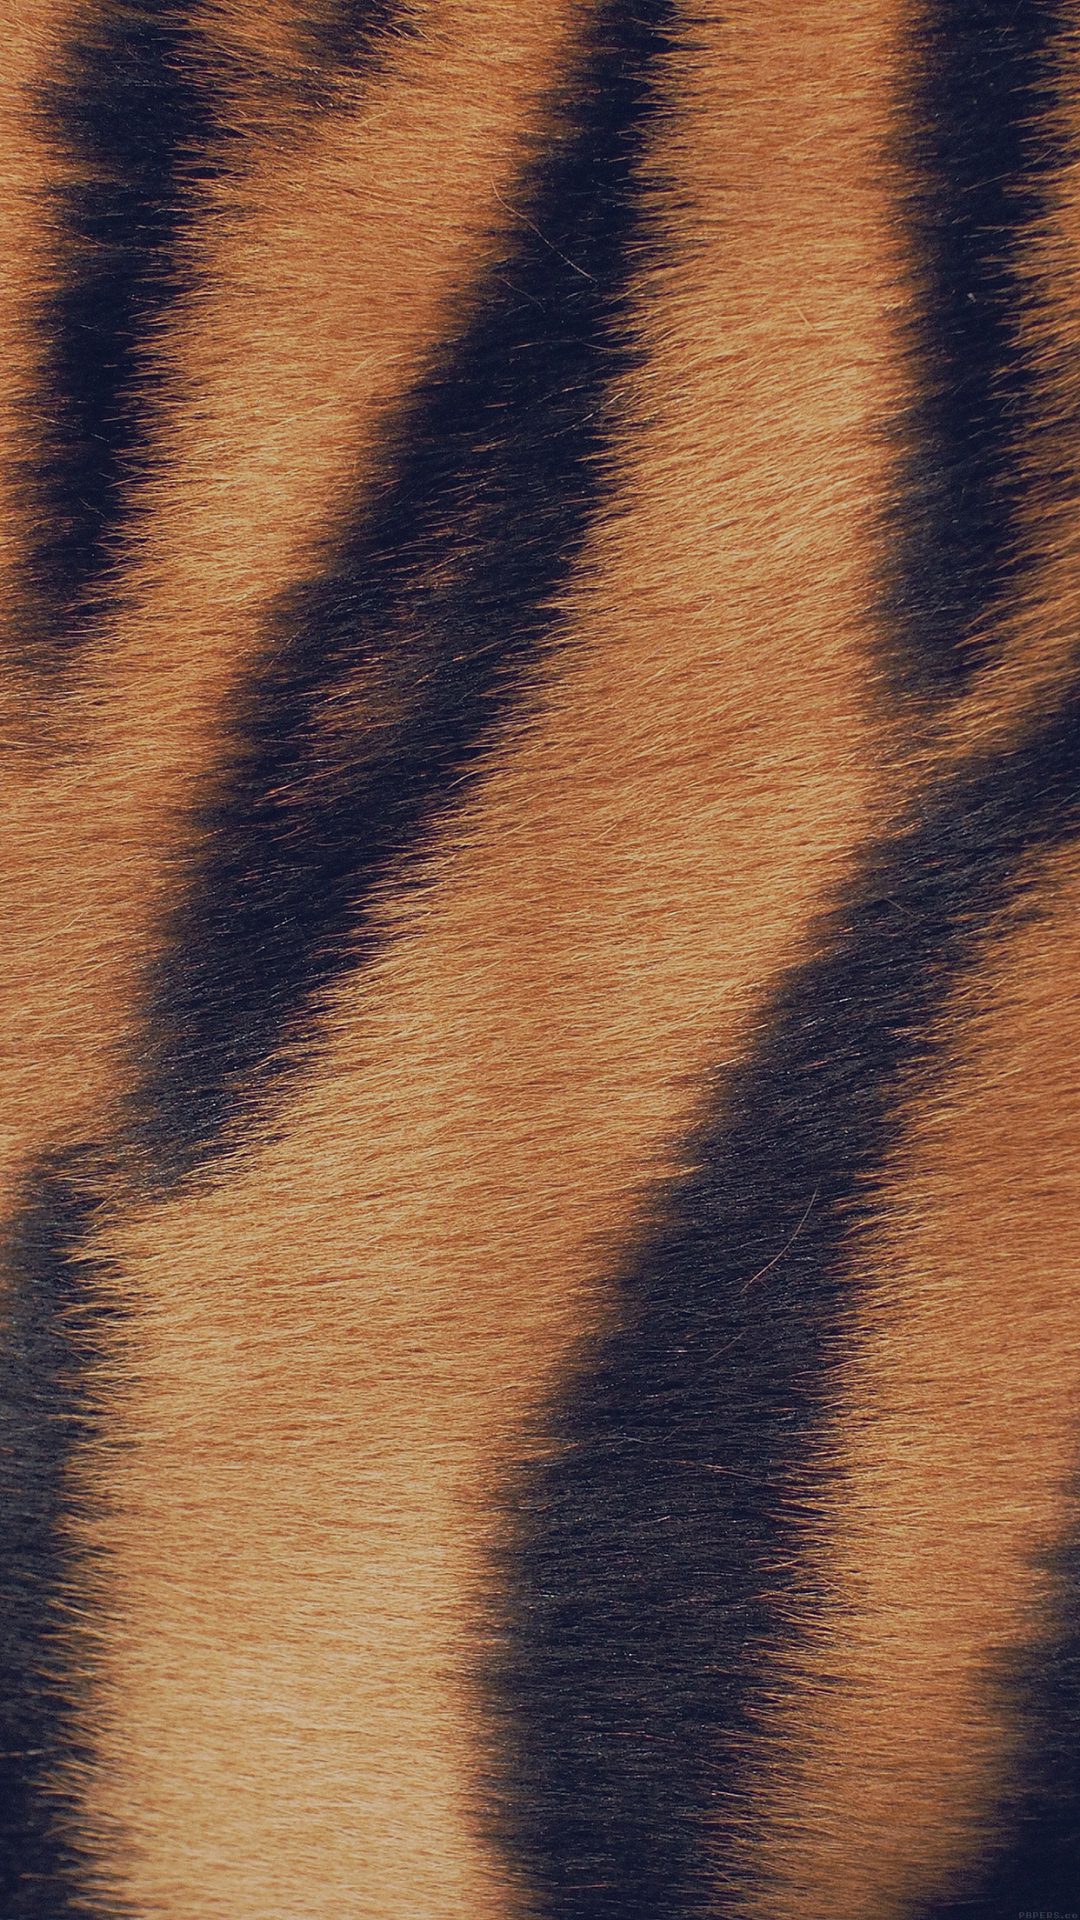 Wild Cat Texture Fur Nature Pattern